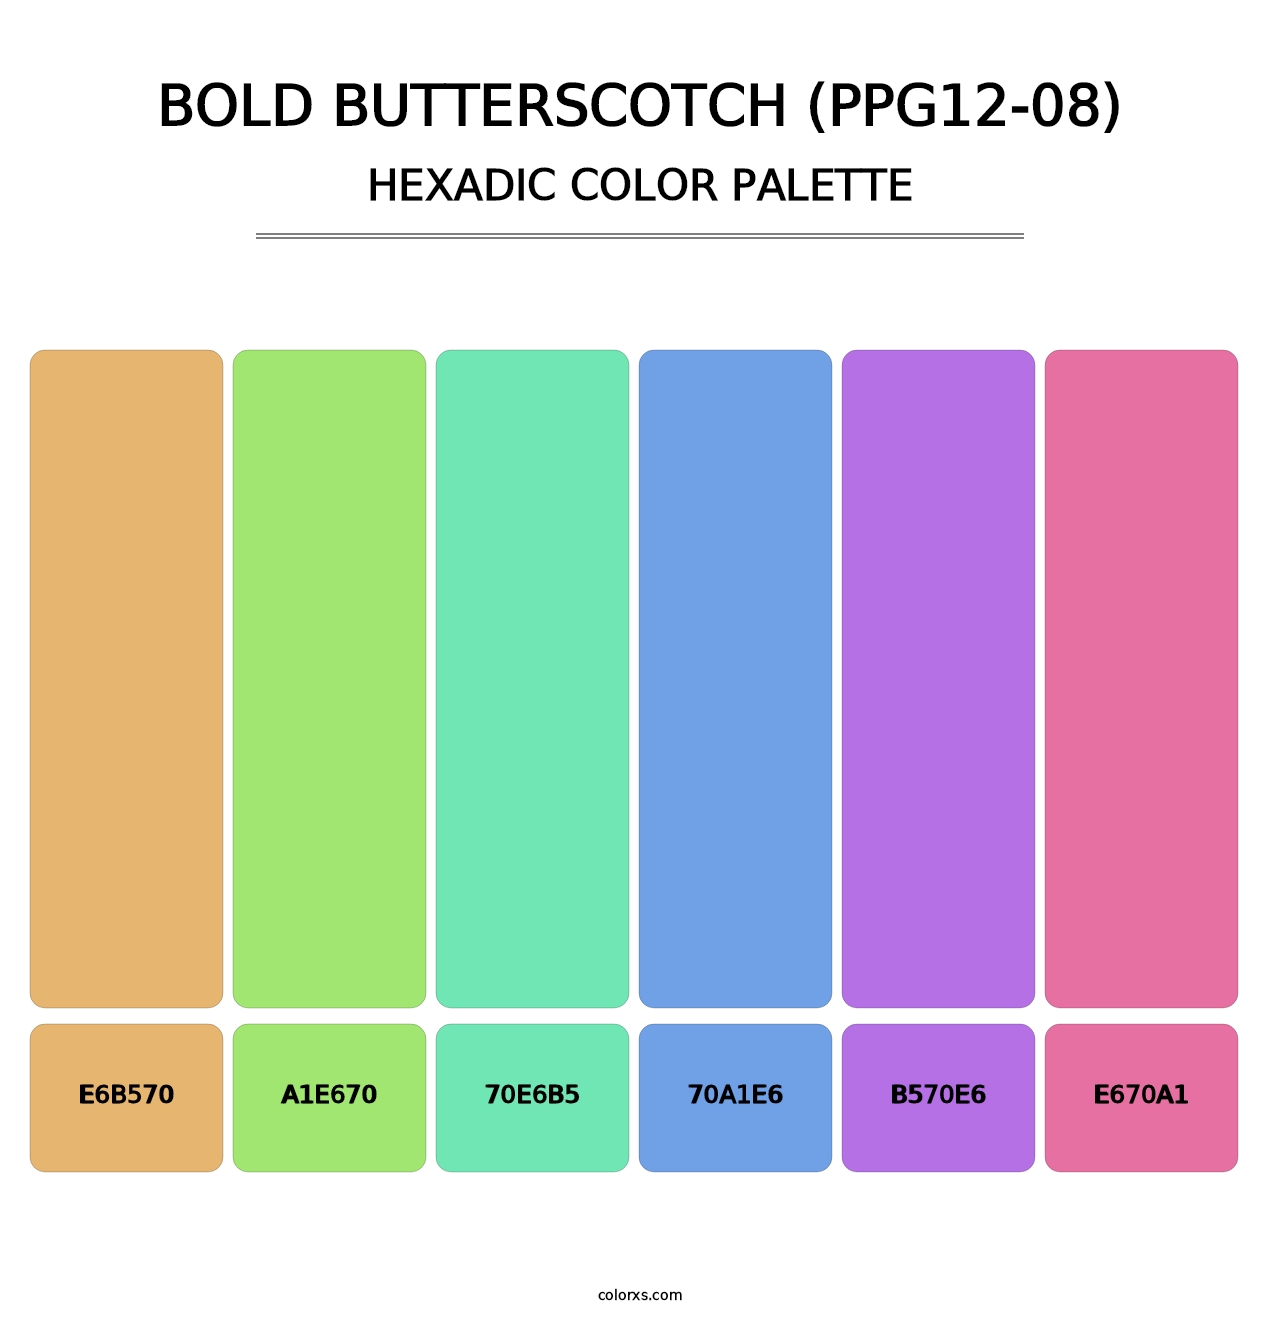 Bold Butterscotch (PPG12-08) - Hexadic Color Palette